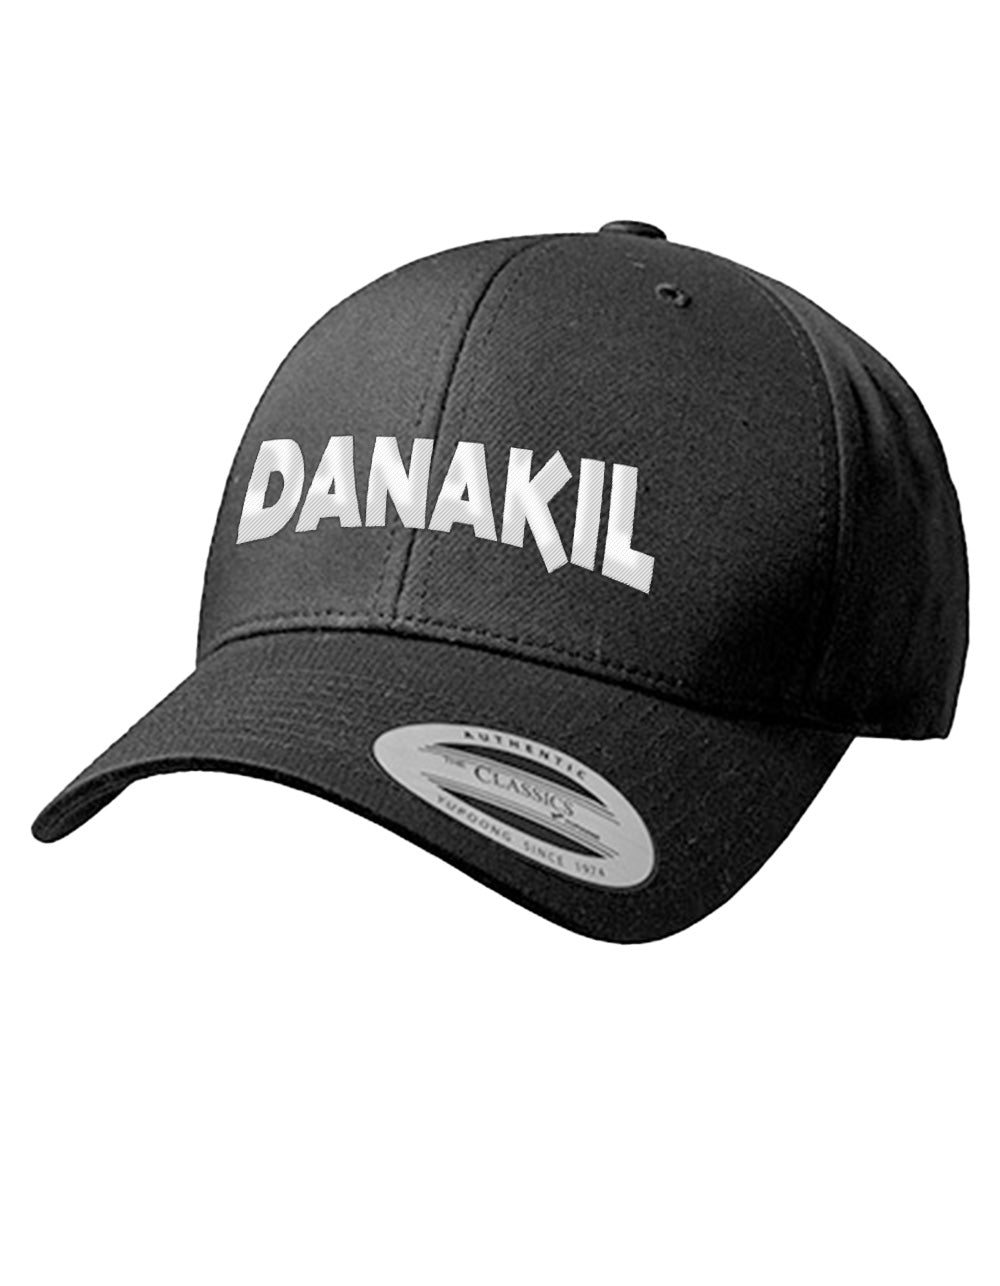 Danakil - Casquette curved brodée